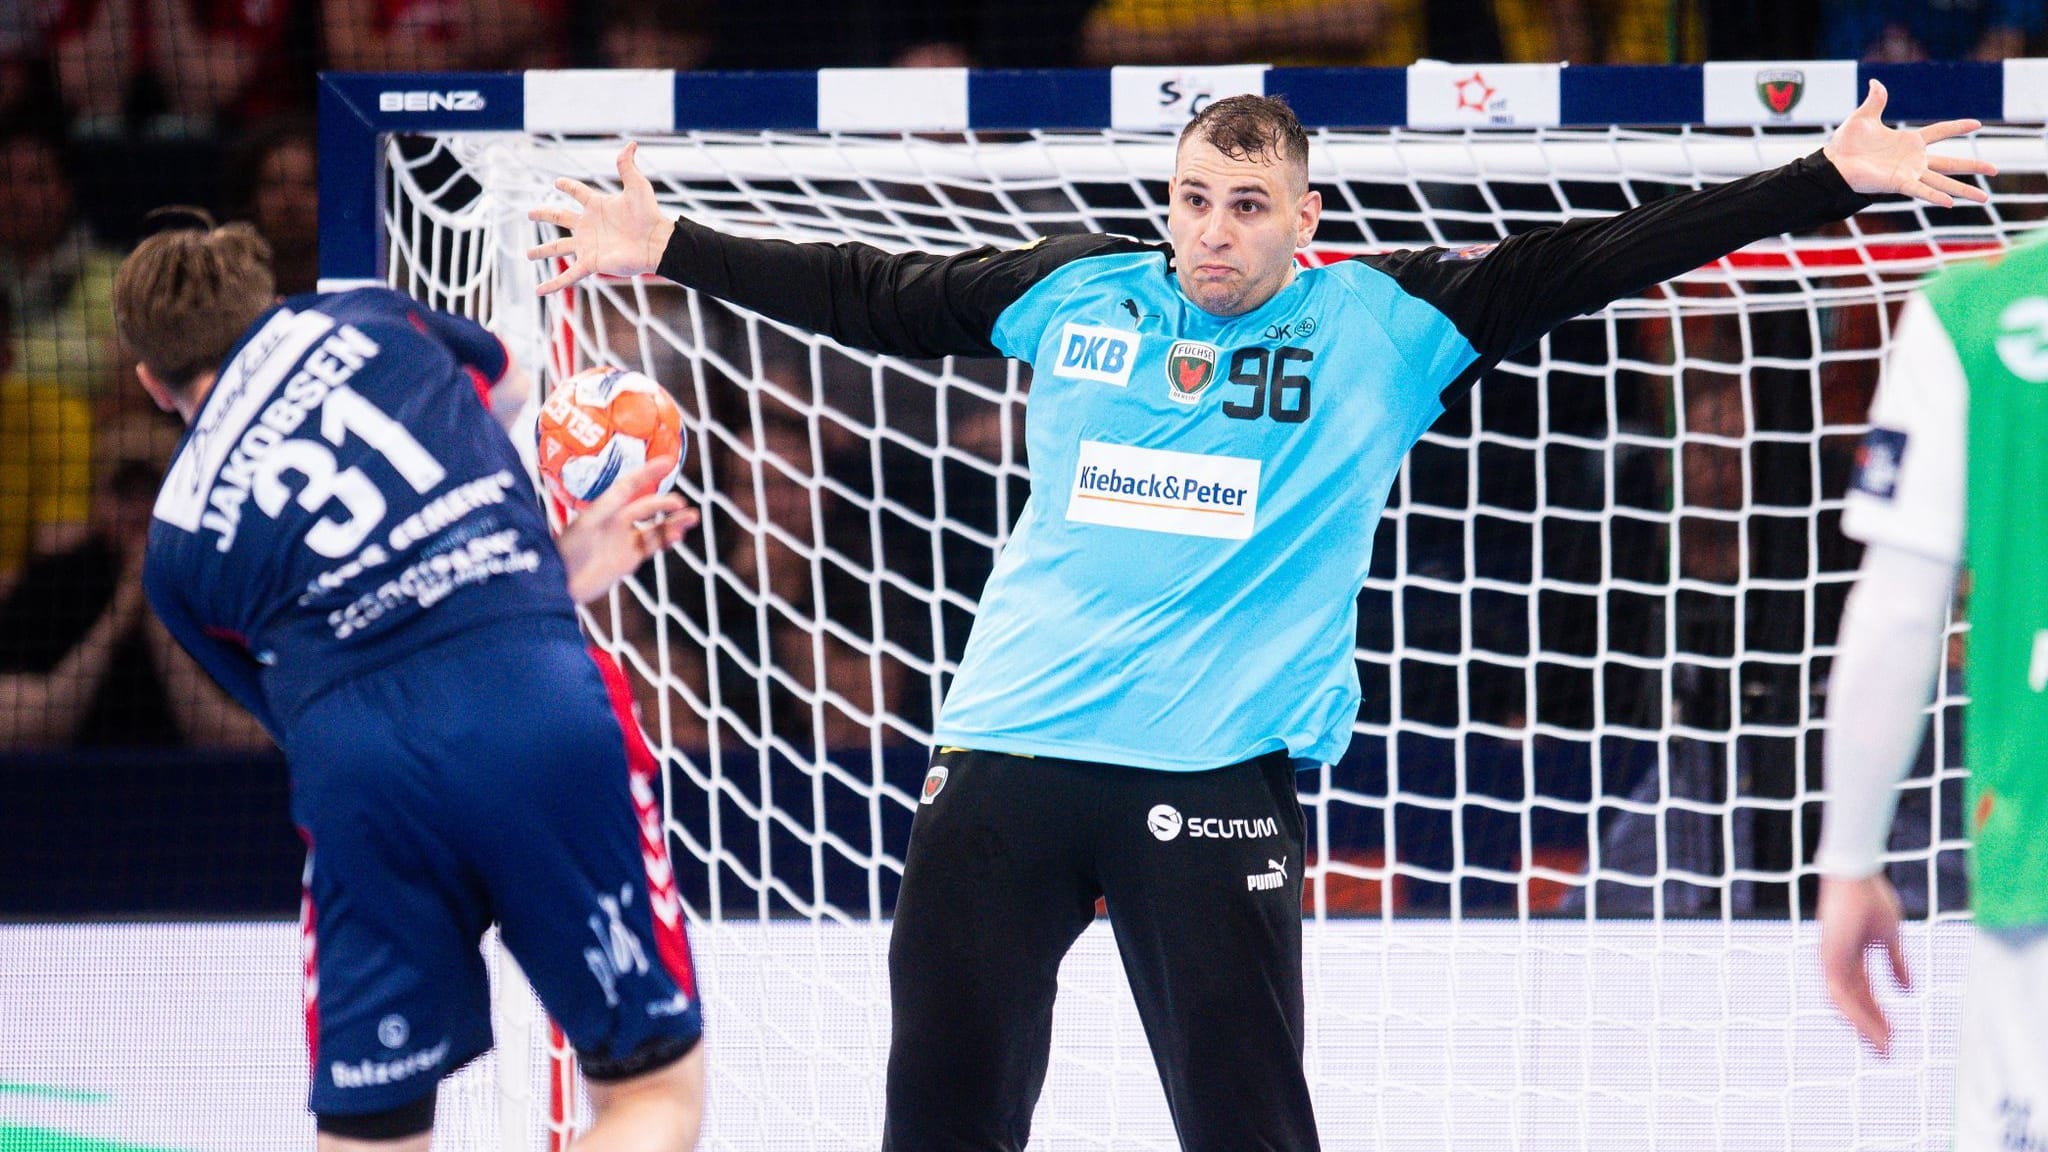 Flensburgs Handballer triumphieren in der European League